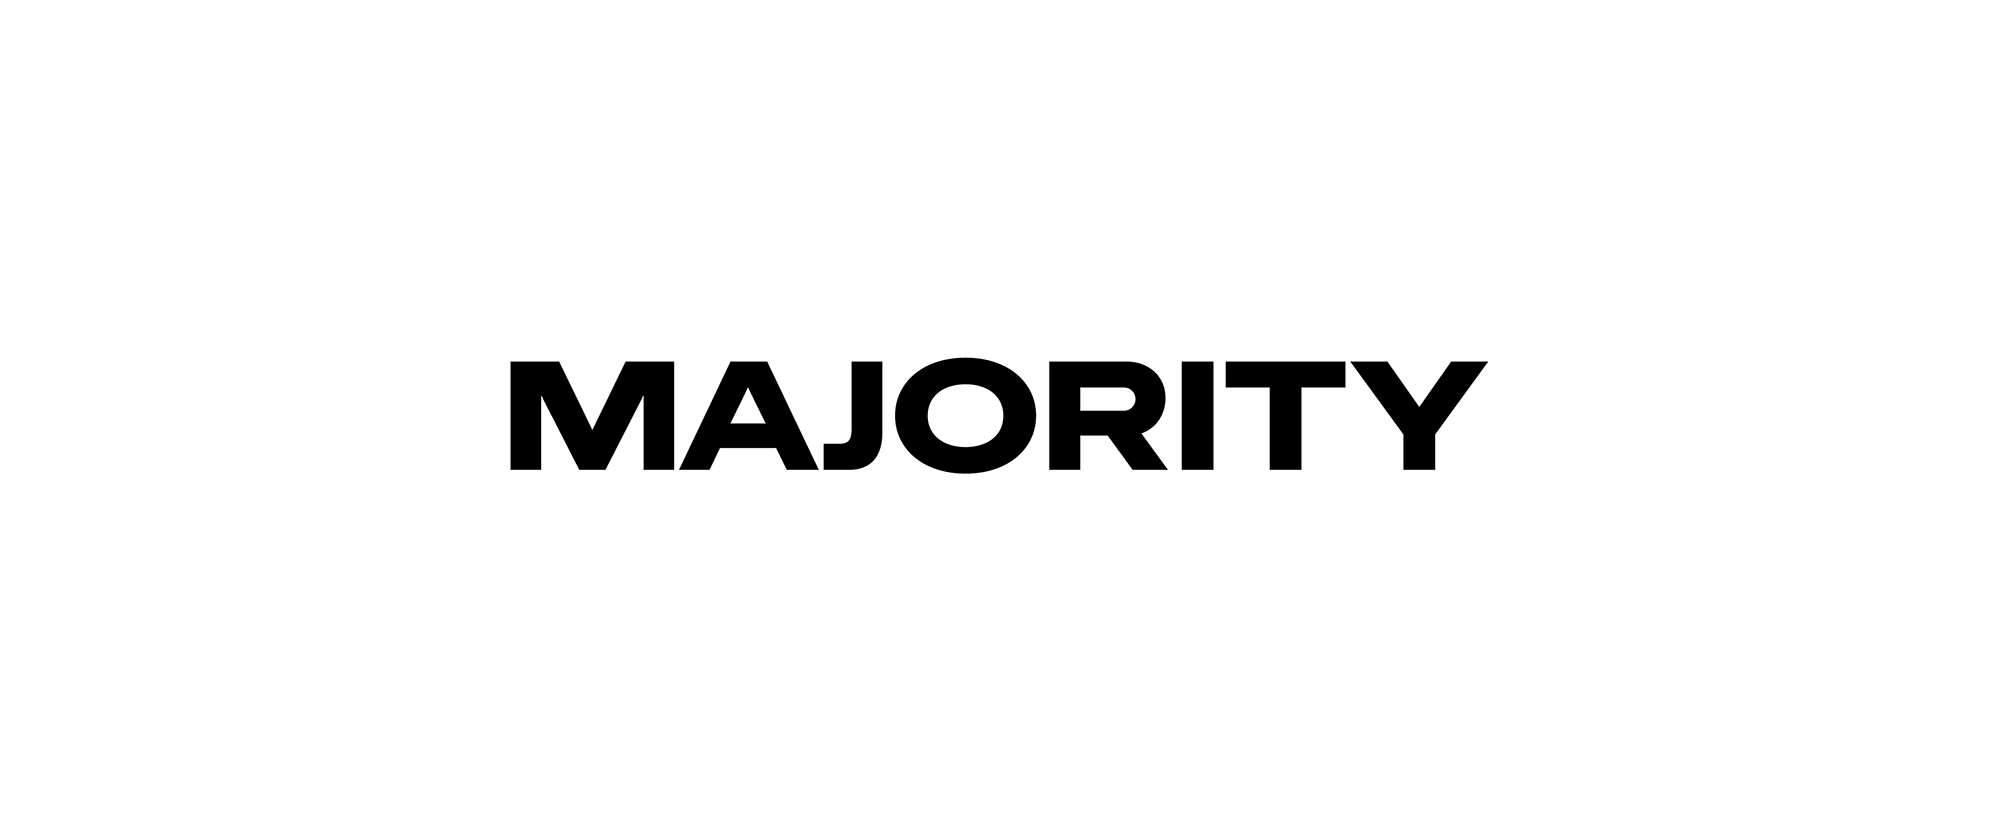 New Logo and Identity for Majority by Bold Scandinavia